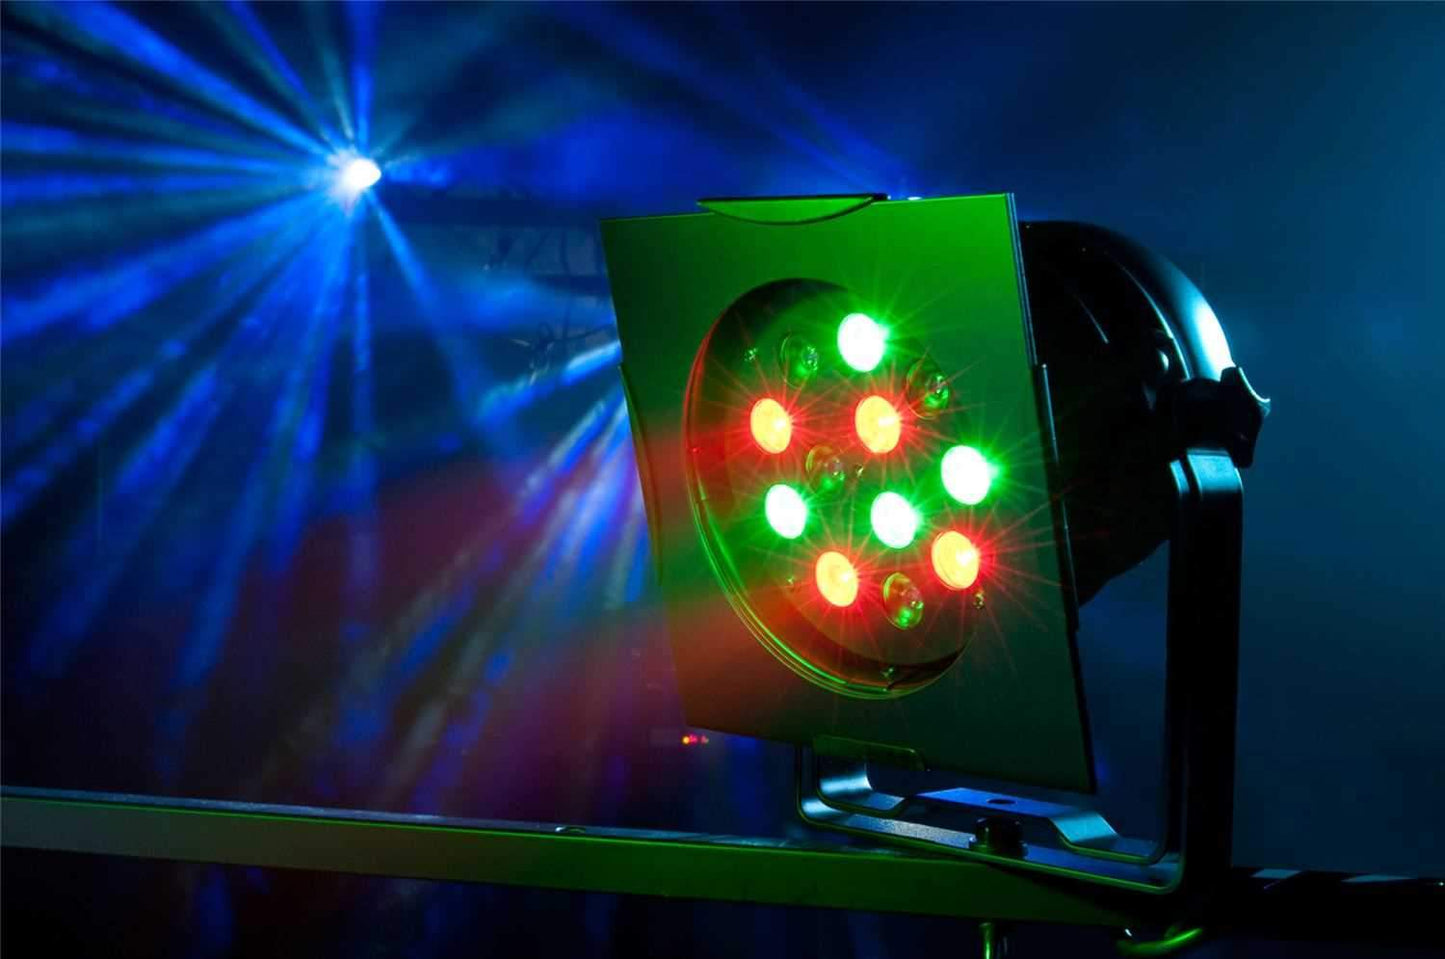 American DJ PRO 38 B LED RC 12x1W RGB DMX Par - PSSL ProSound and Stage Lighting